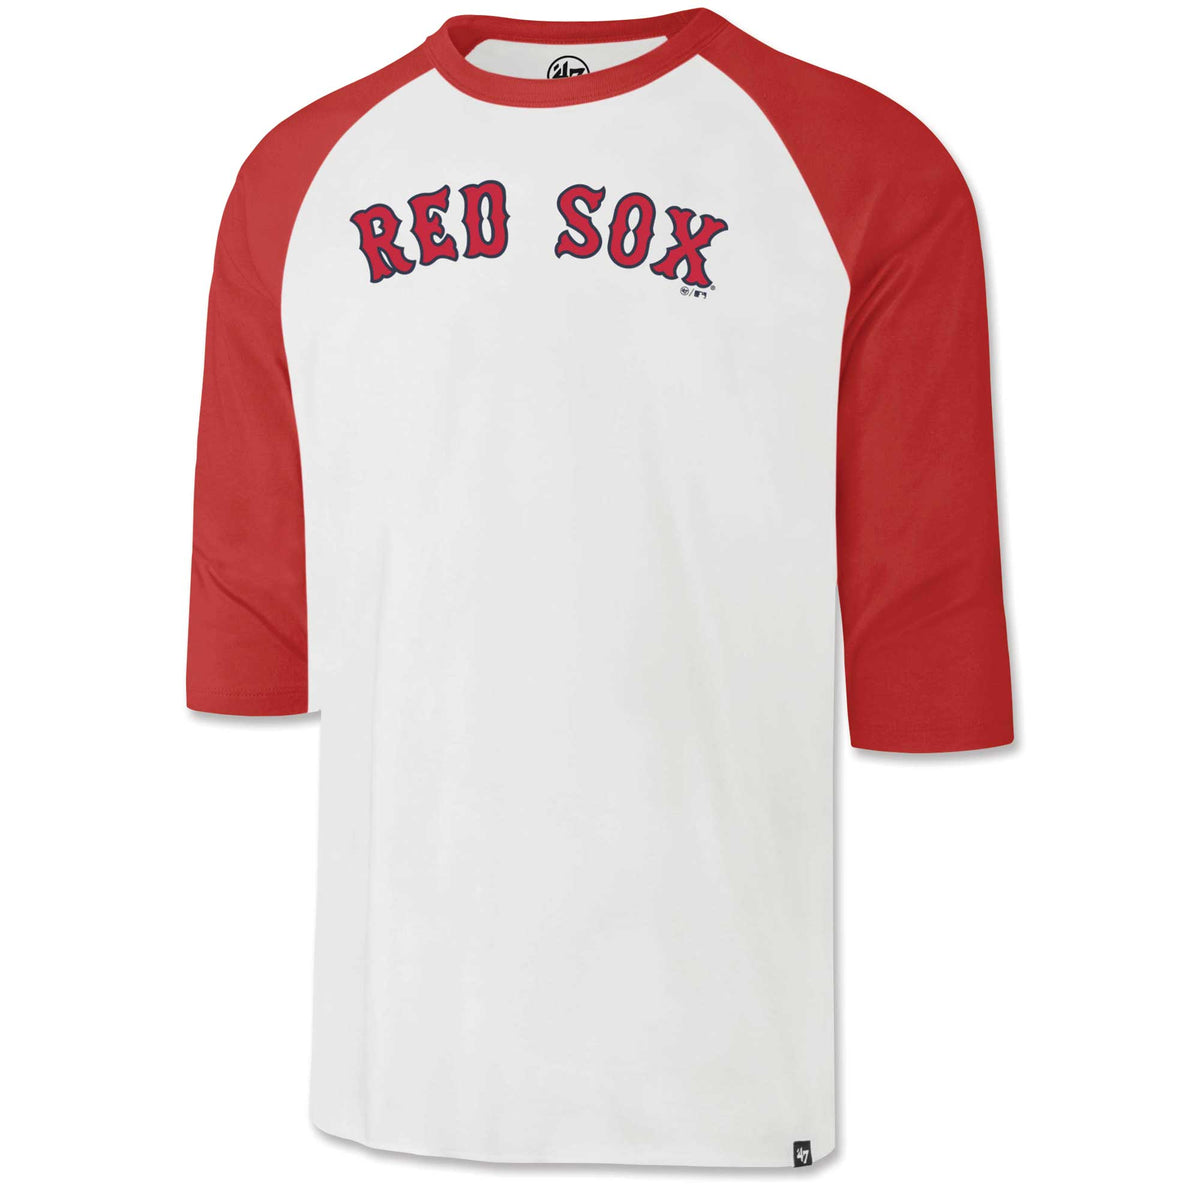 red sox 3 4 sleeve shirt